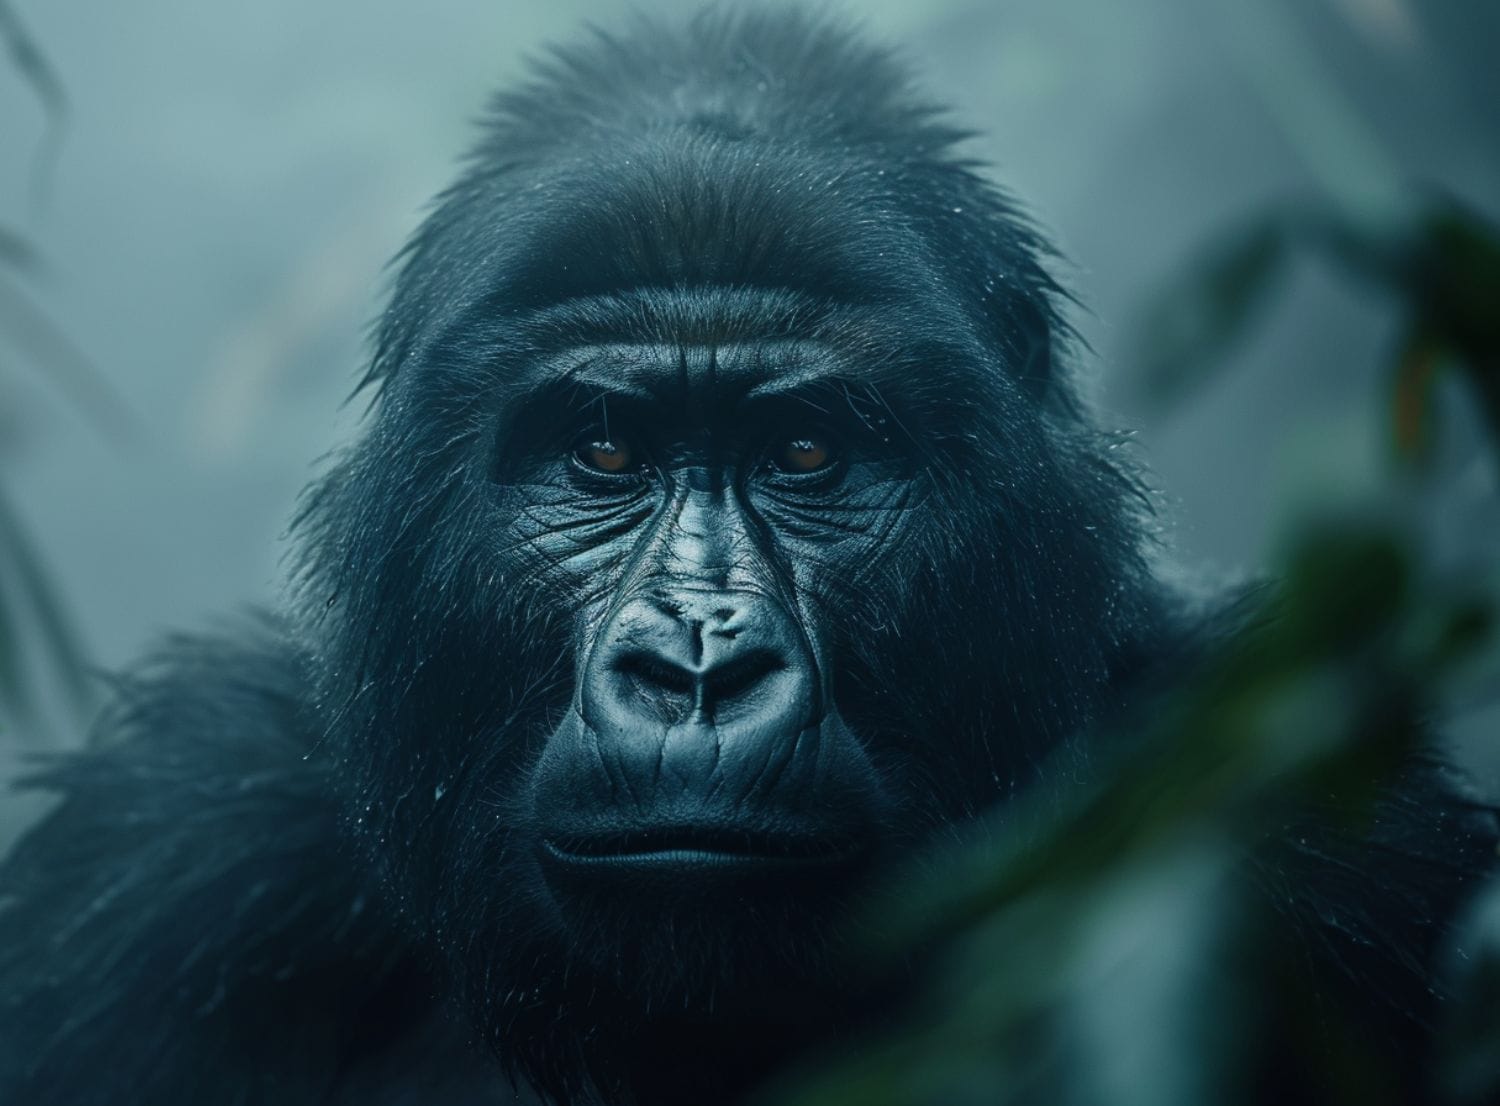 Gorilla pensieroso nell'habitat nebbioso 